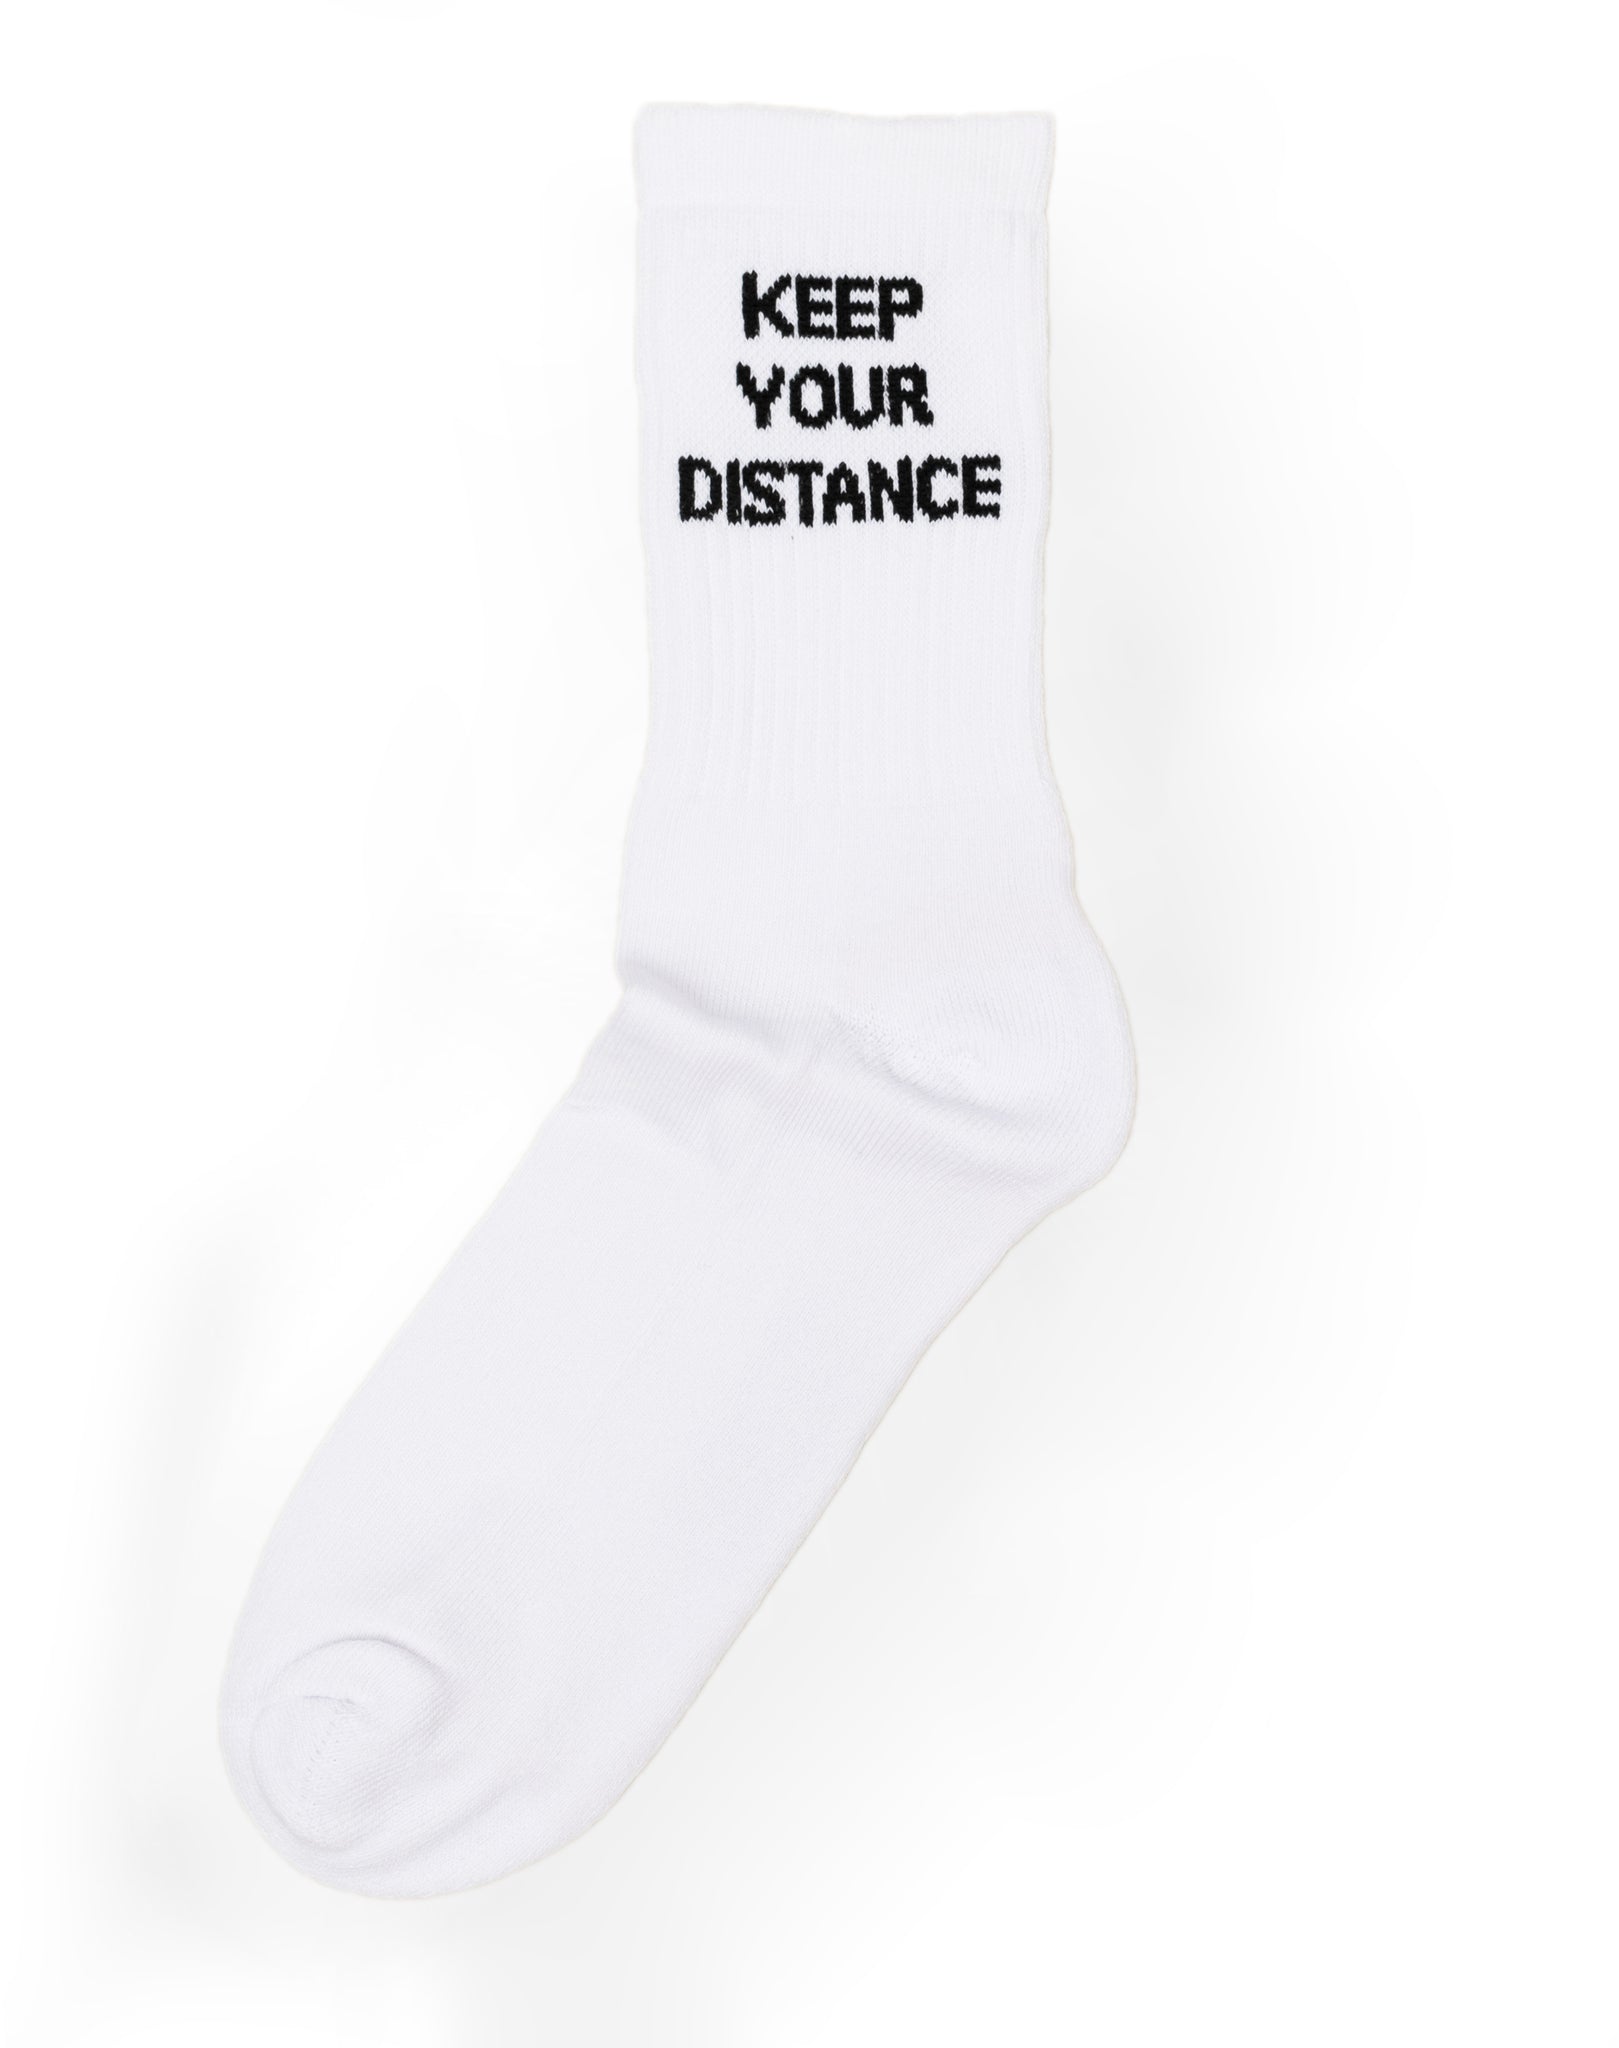 PAUSE 'Keep Your Distance' Socks